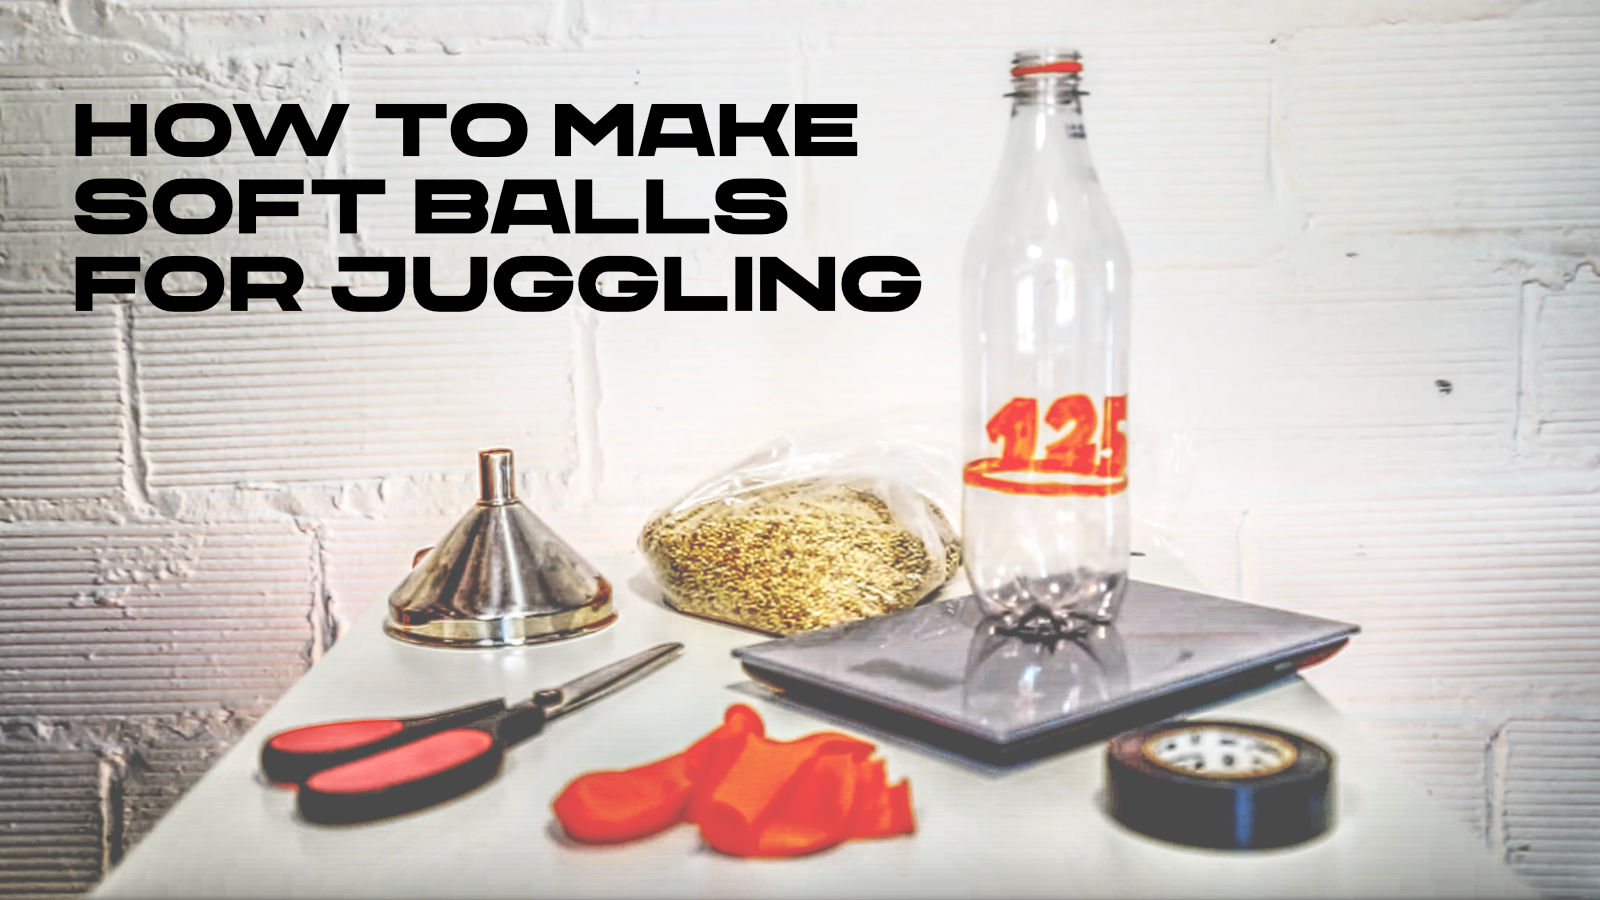 How to make juggling balls, soft balls